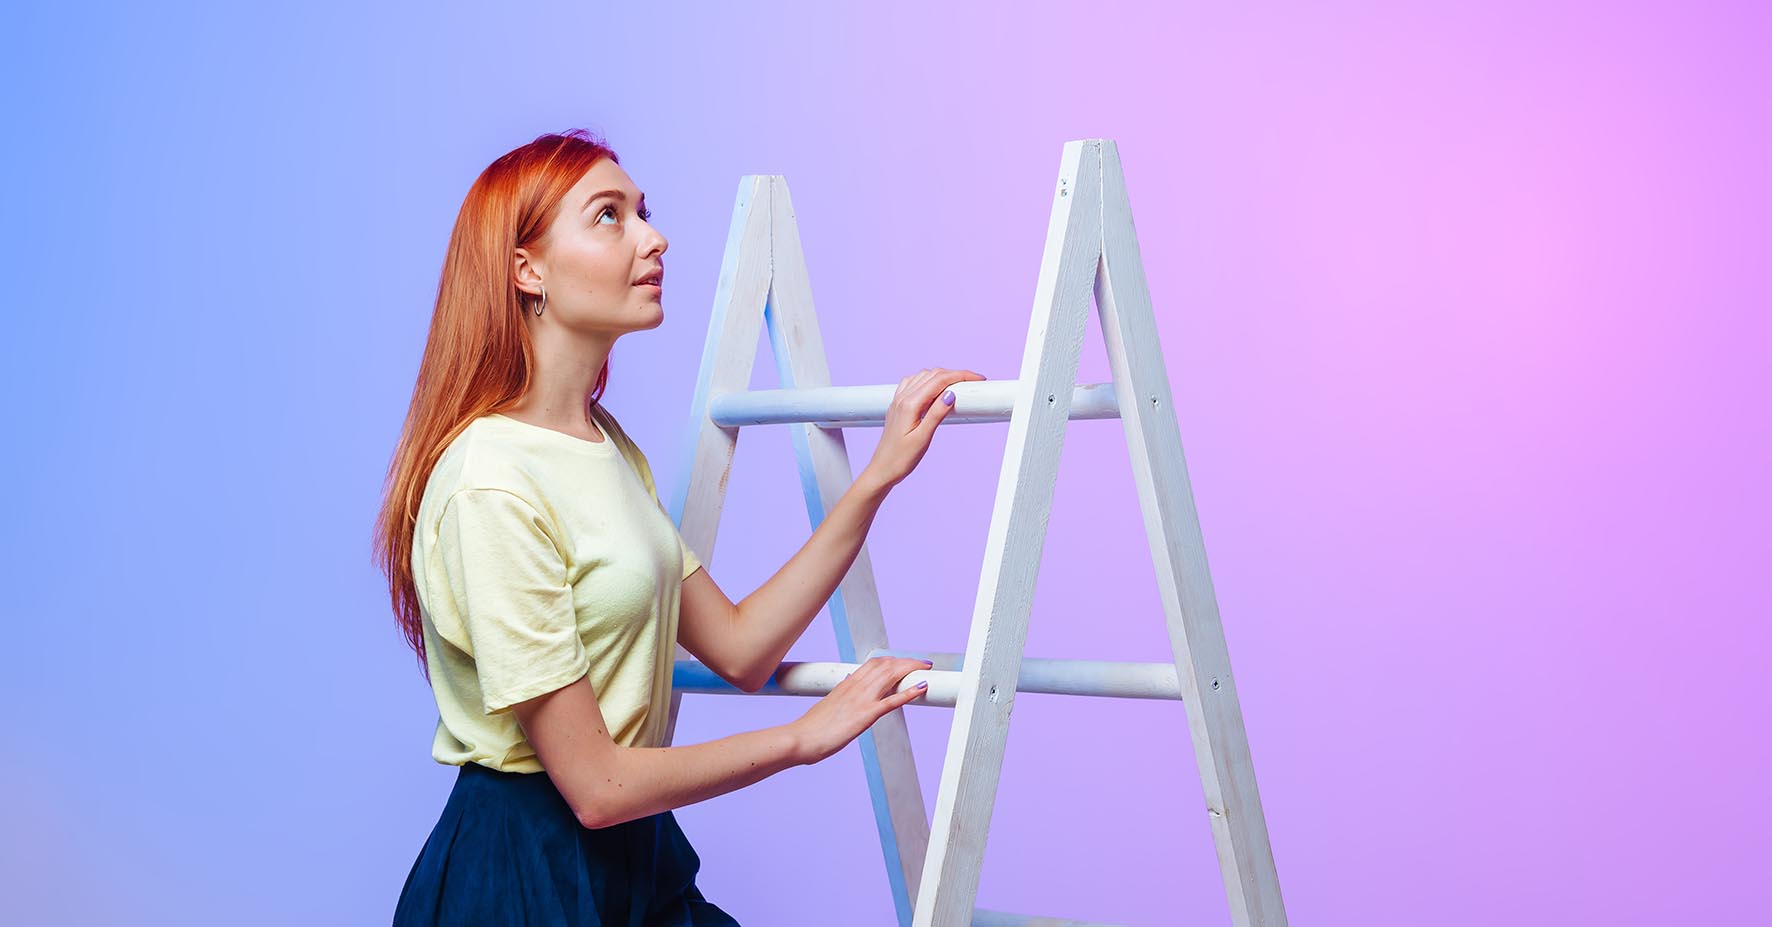 Woman ginger climbing a ladder, blue/pink background